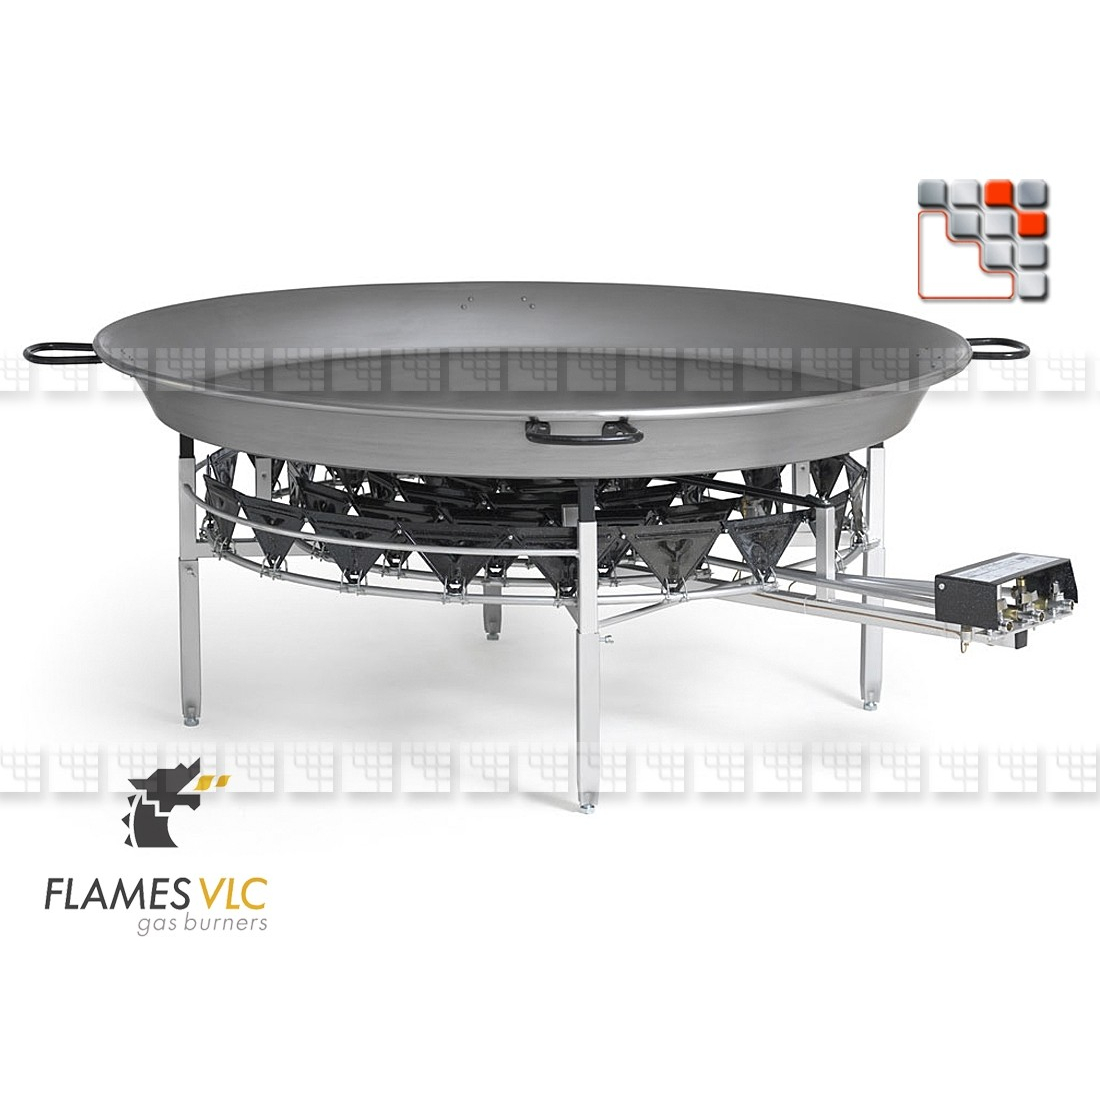 Bruleur Industriel O-1200 98 Kw Flames VLC F08-O1200 FLAMES VLC® Bruleur Gaz Flames VLC